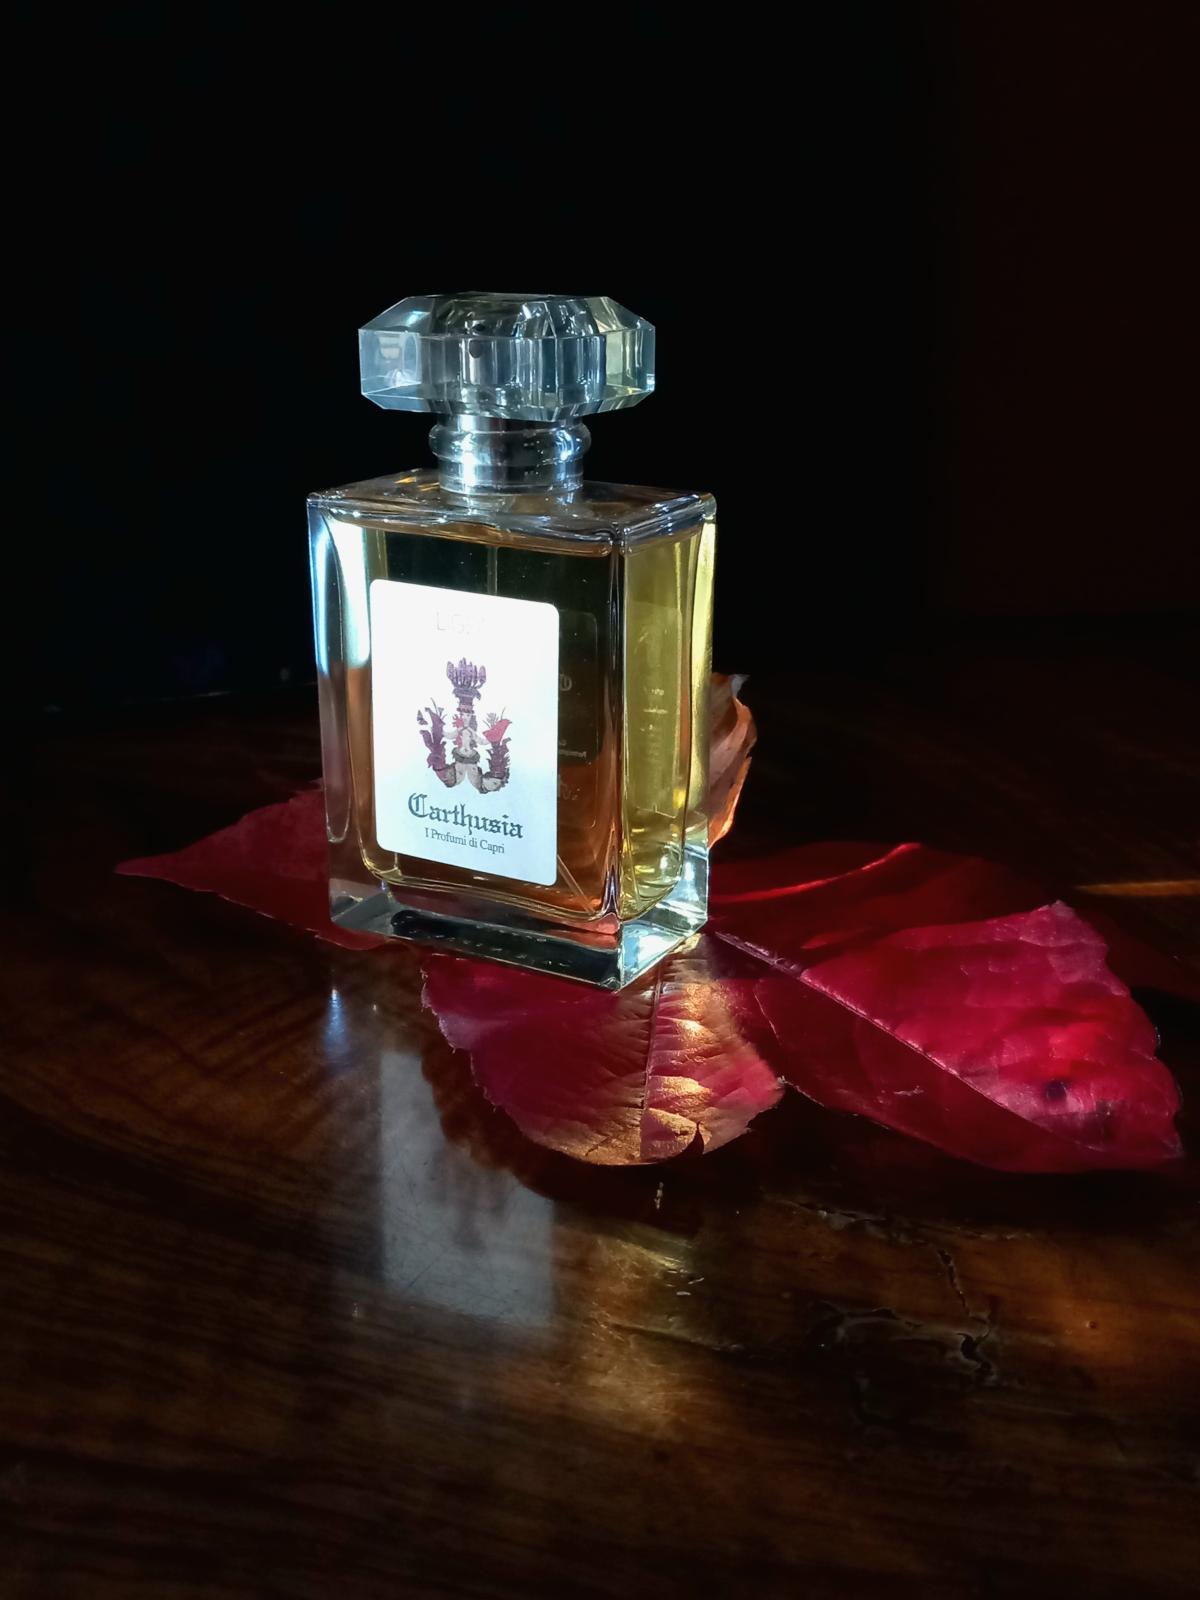 Ligea (Ligea la Sirena) Carthusia perfume - a fragrance for women and ...